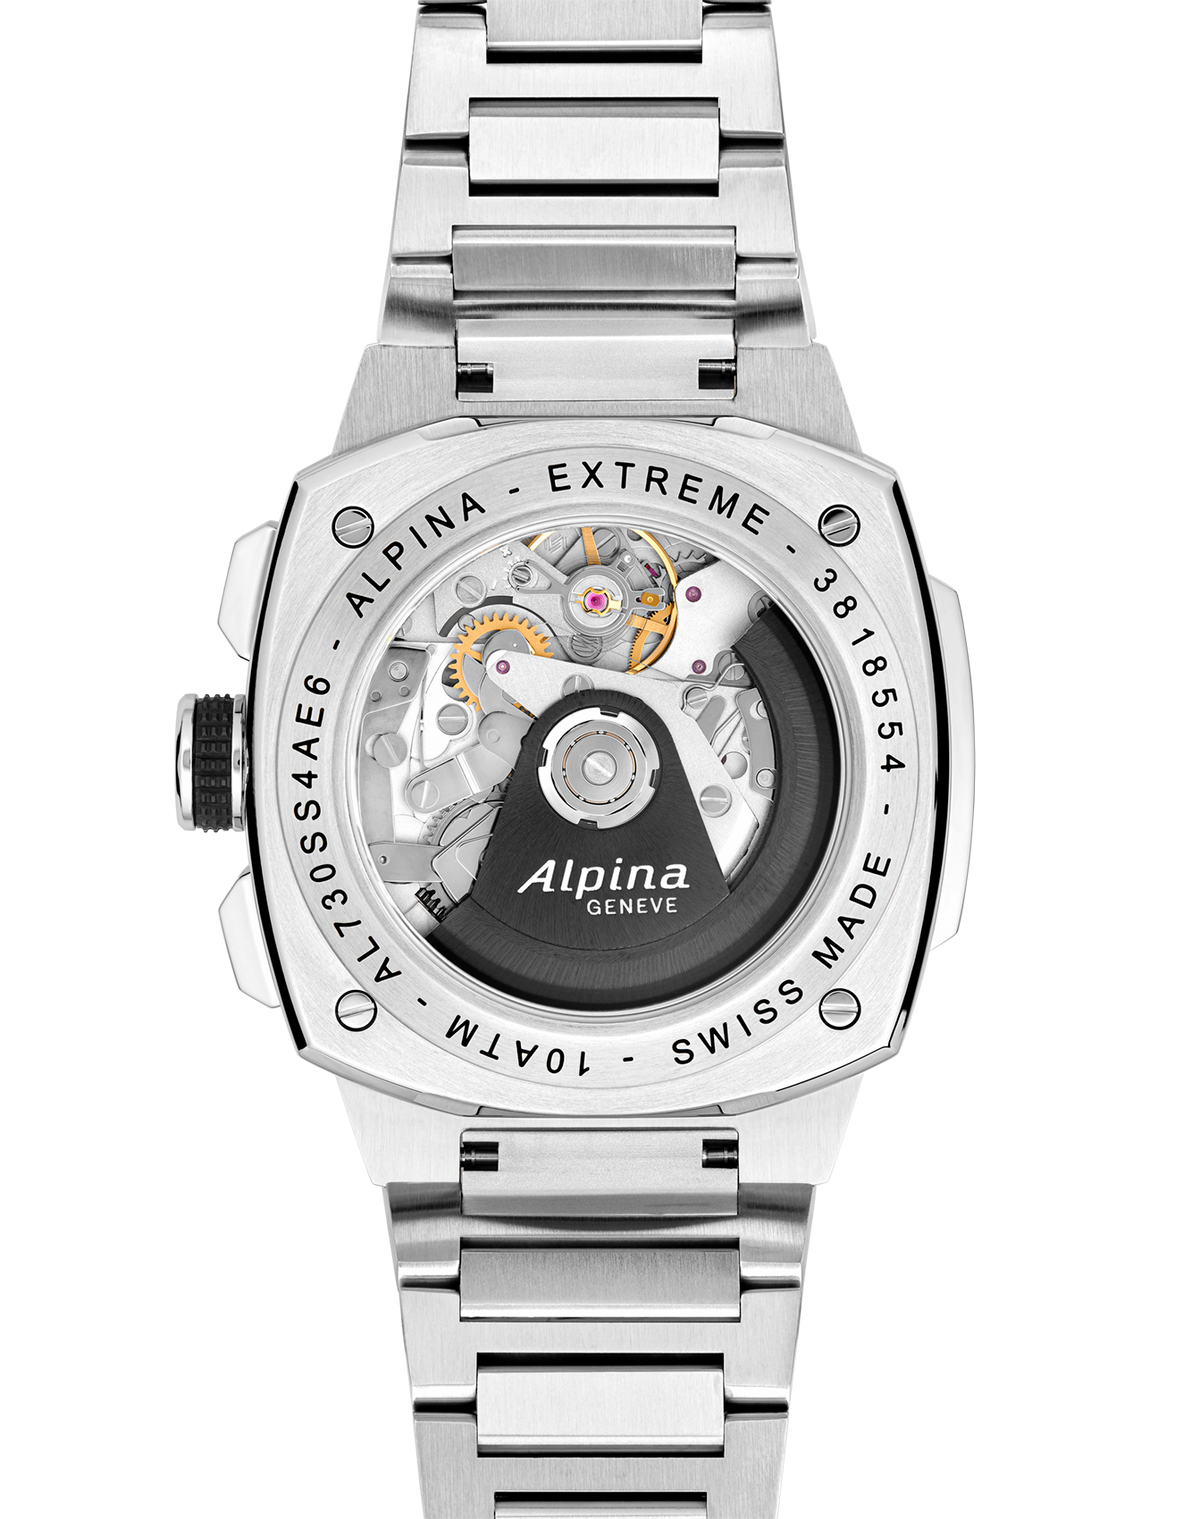 Alpina - Alpiner Extreme Automatic Chronograph - Panda